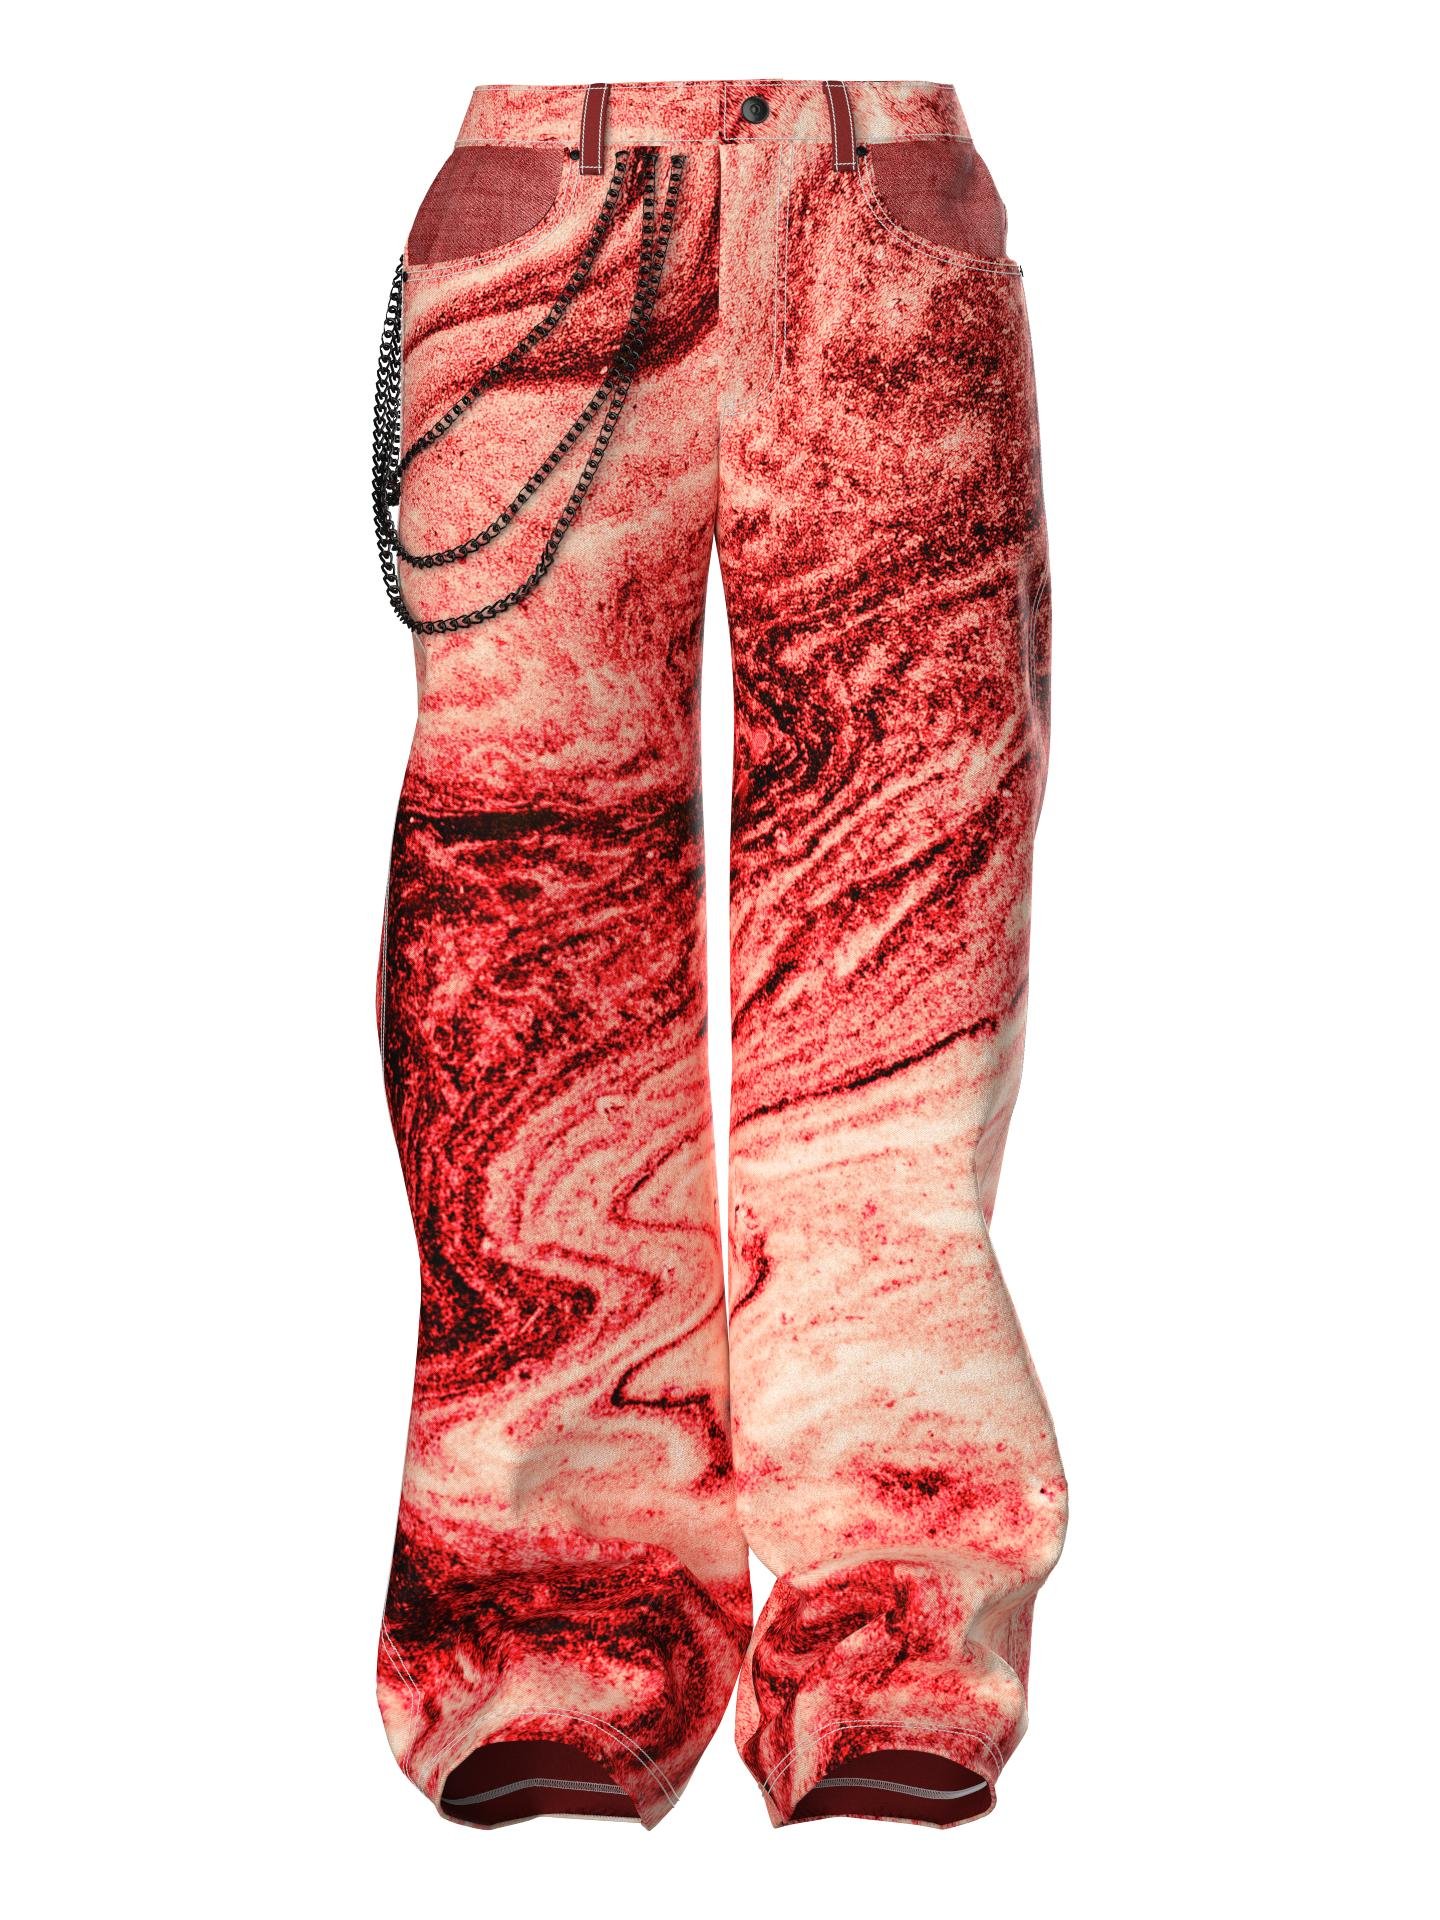 Red Layer Pants by STU.K